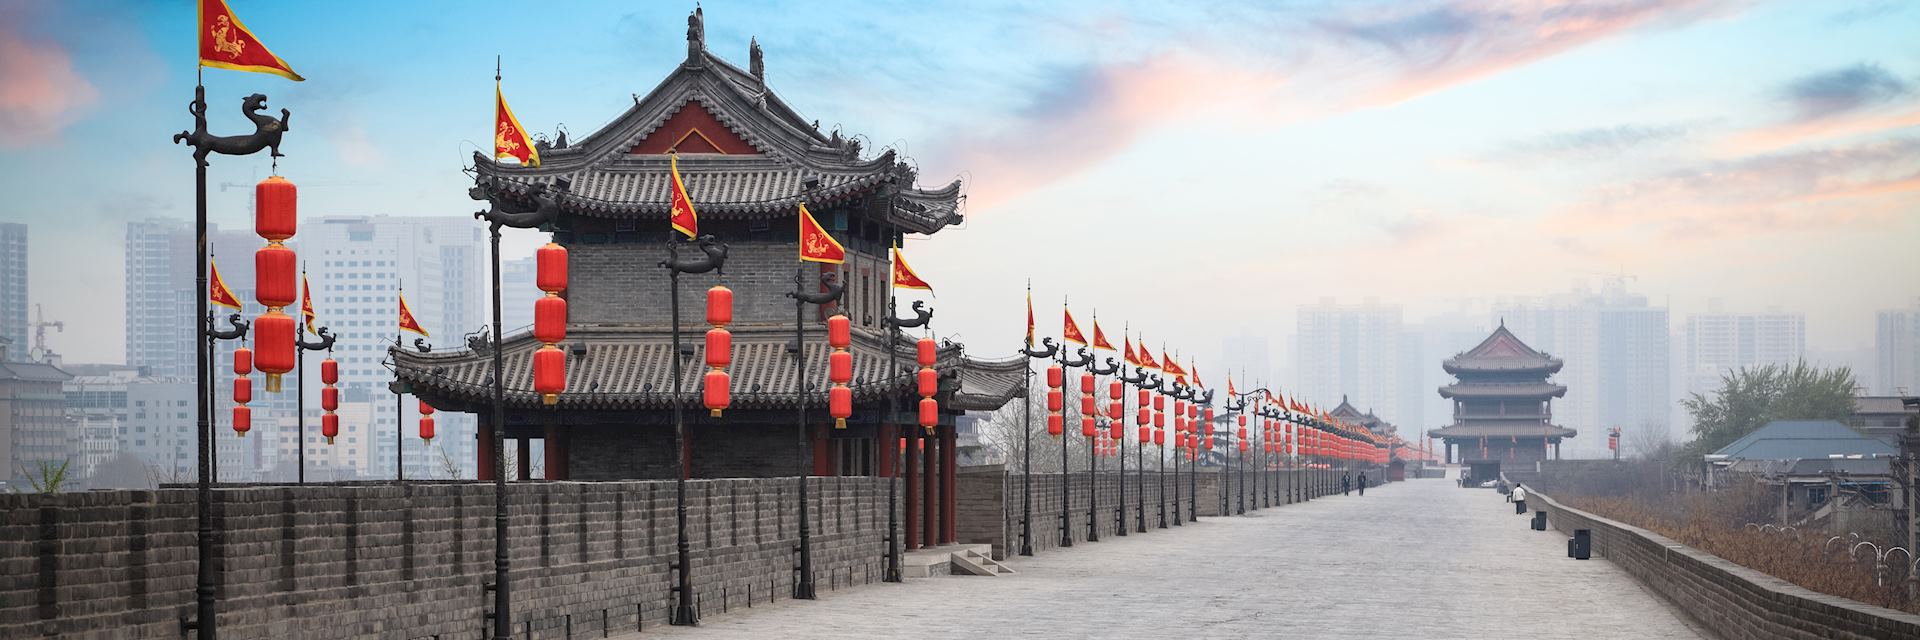 City wall in Xian